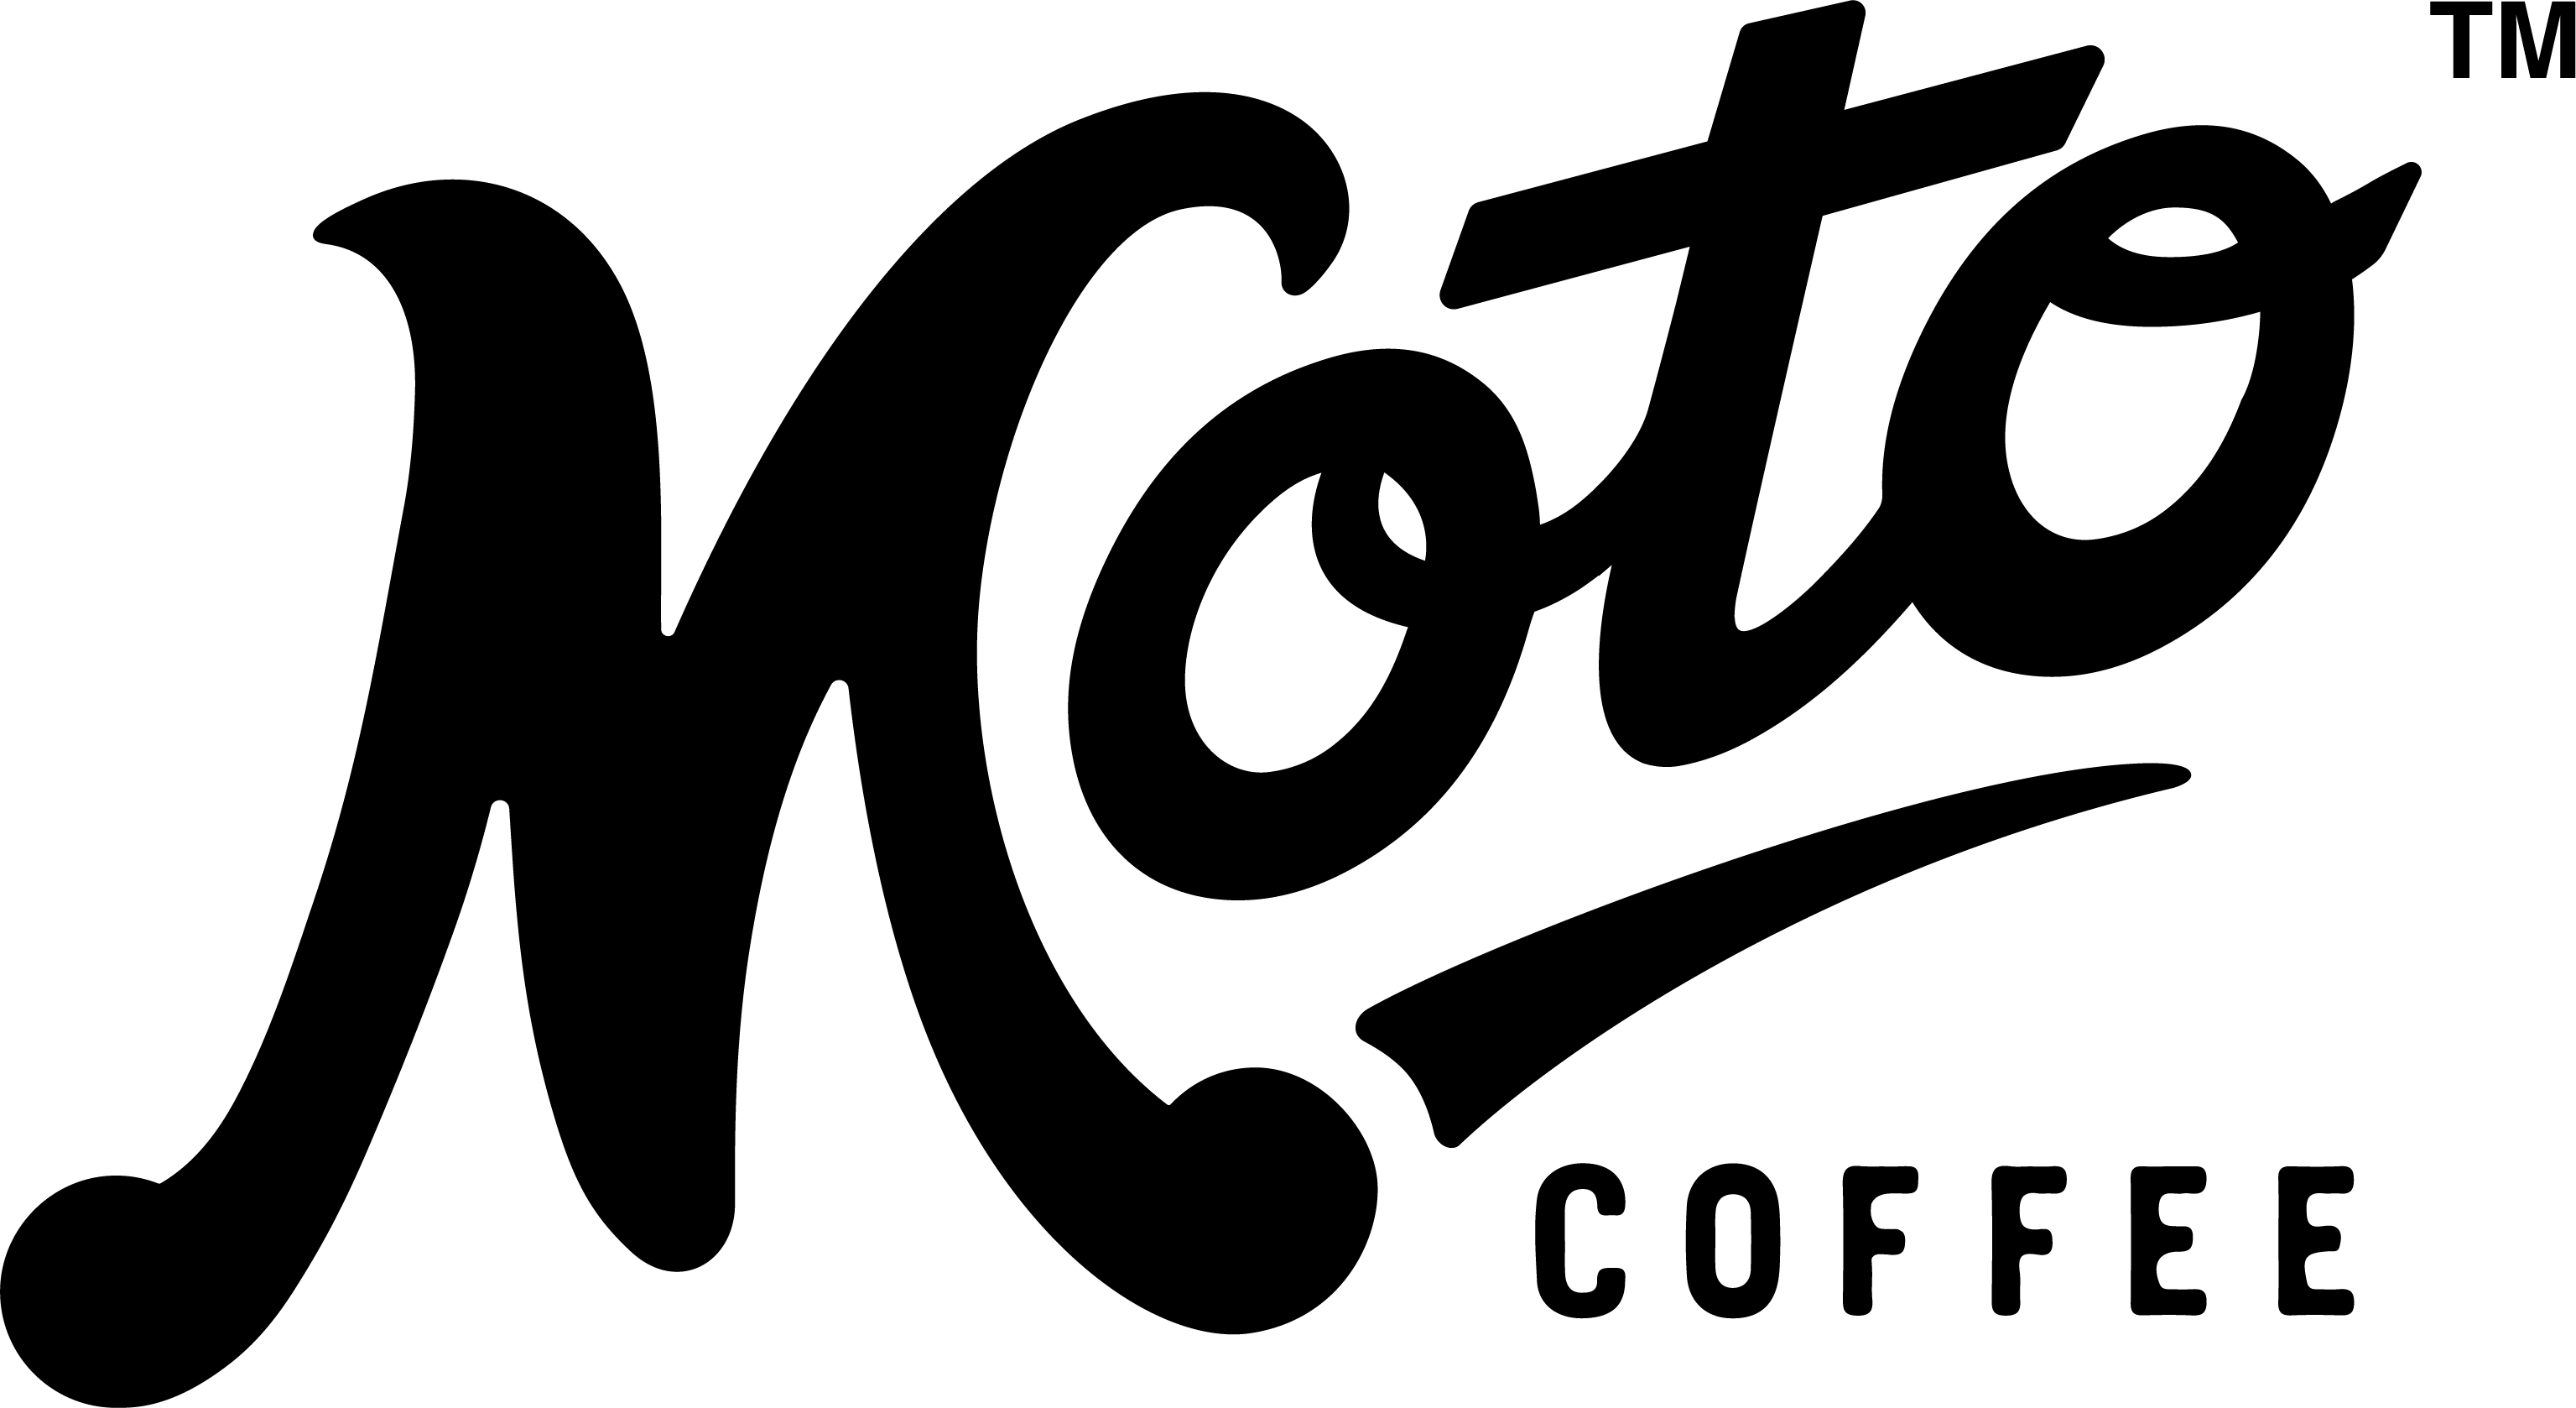 Moto coffee logo 